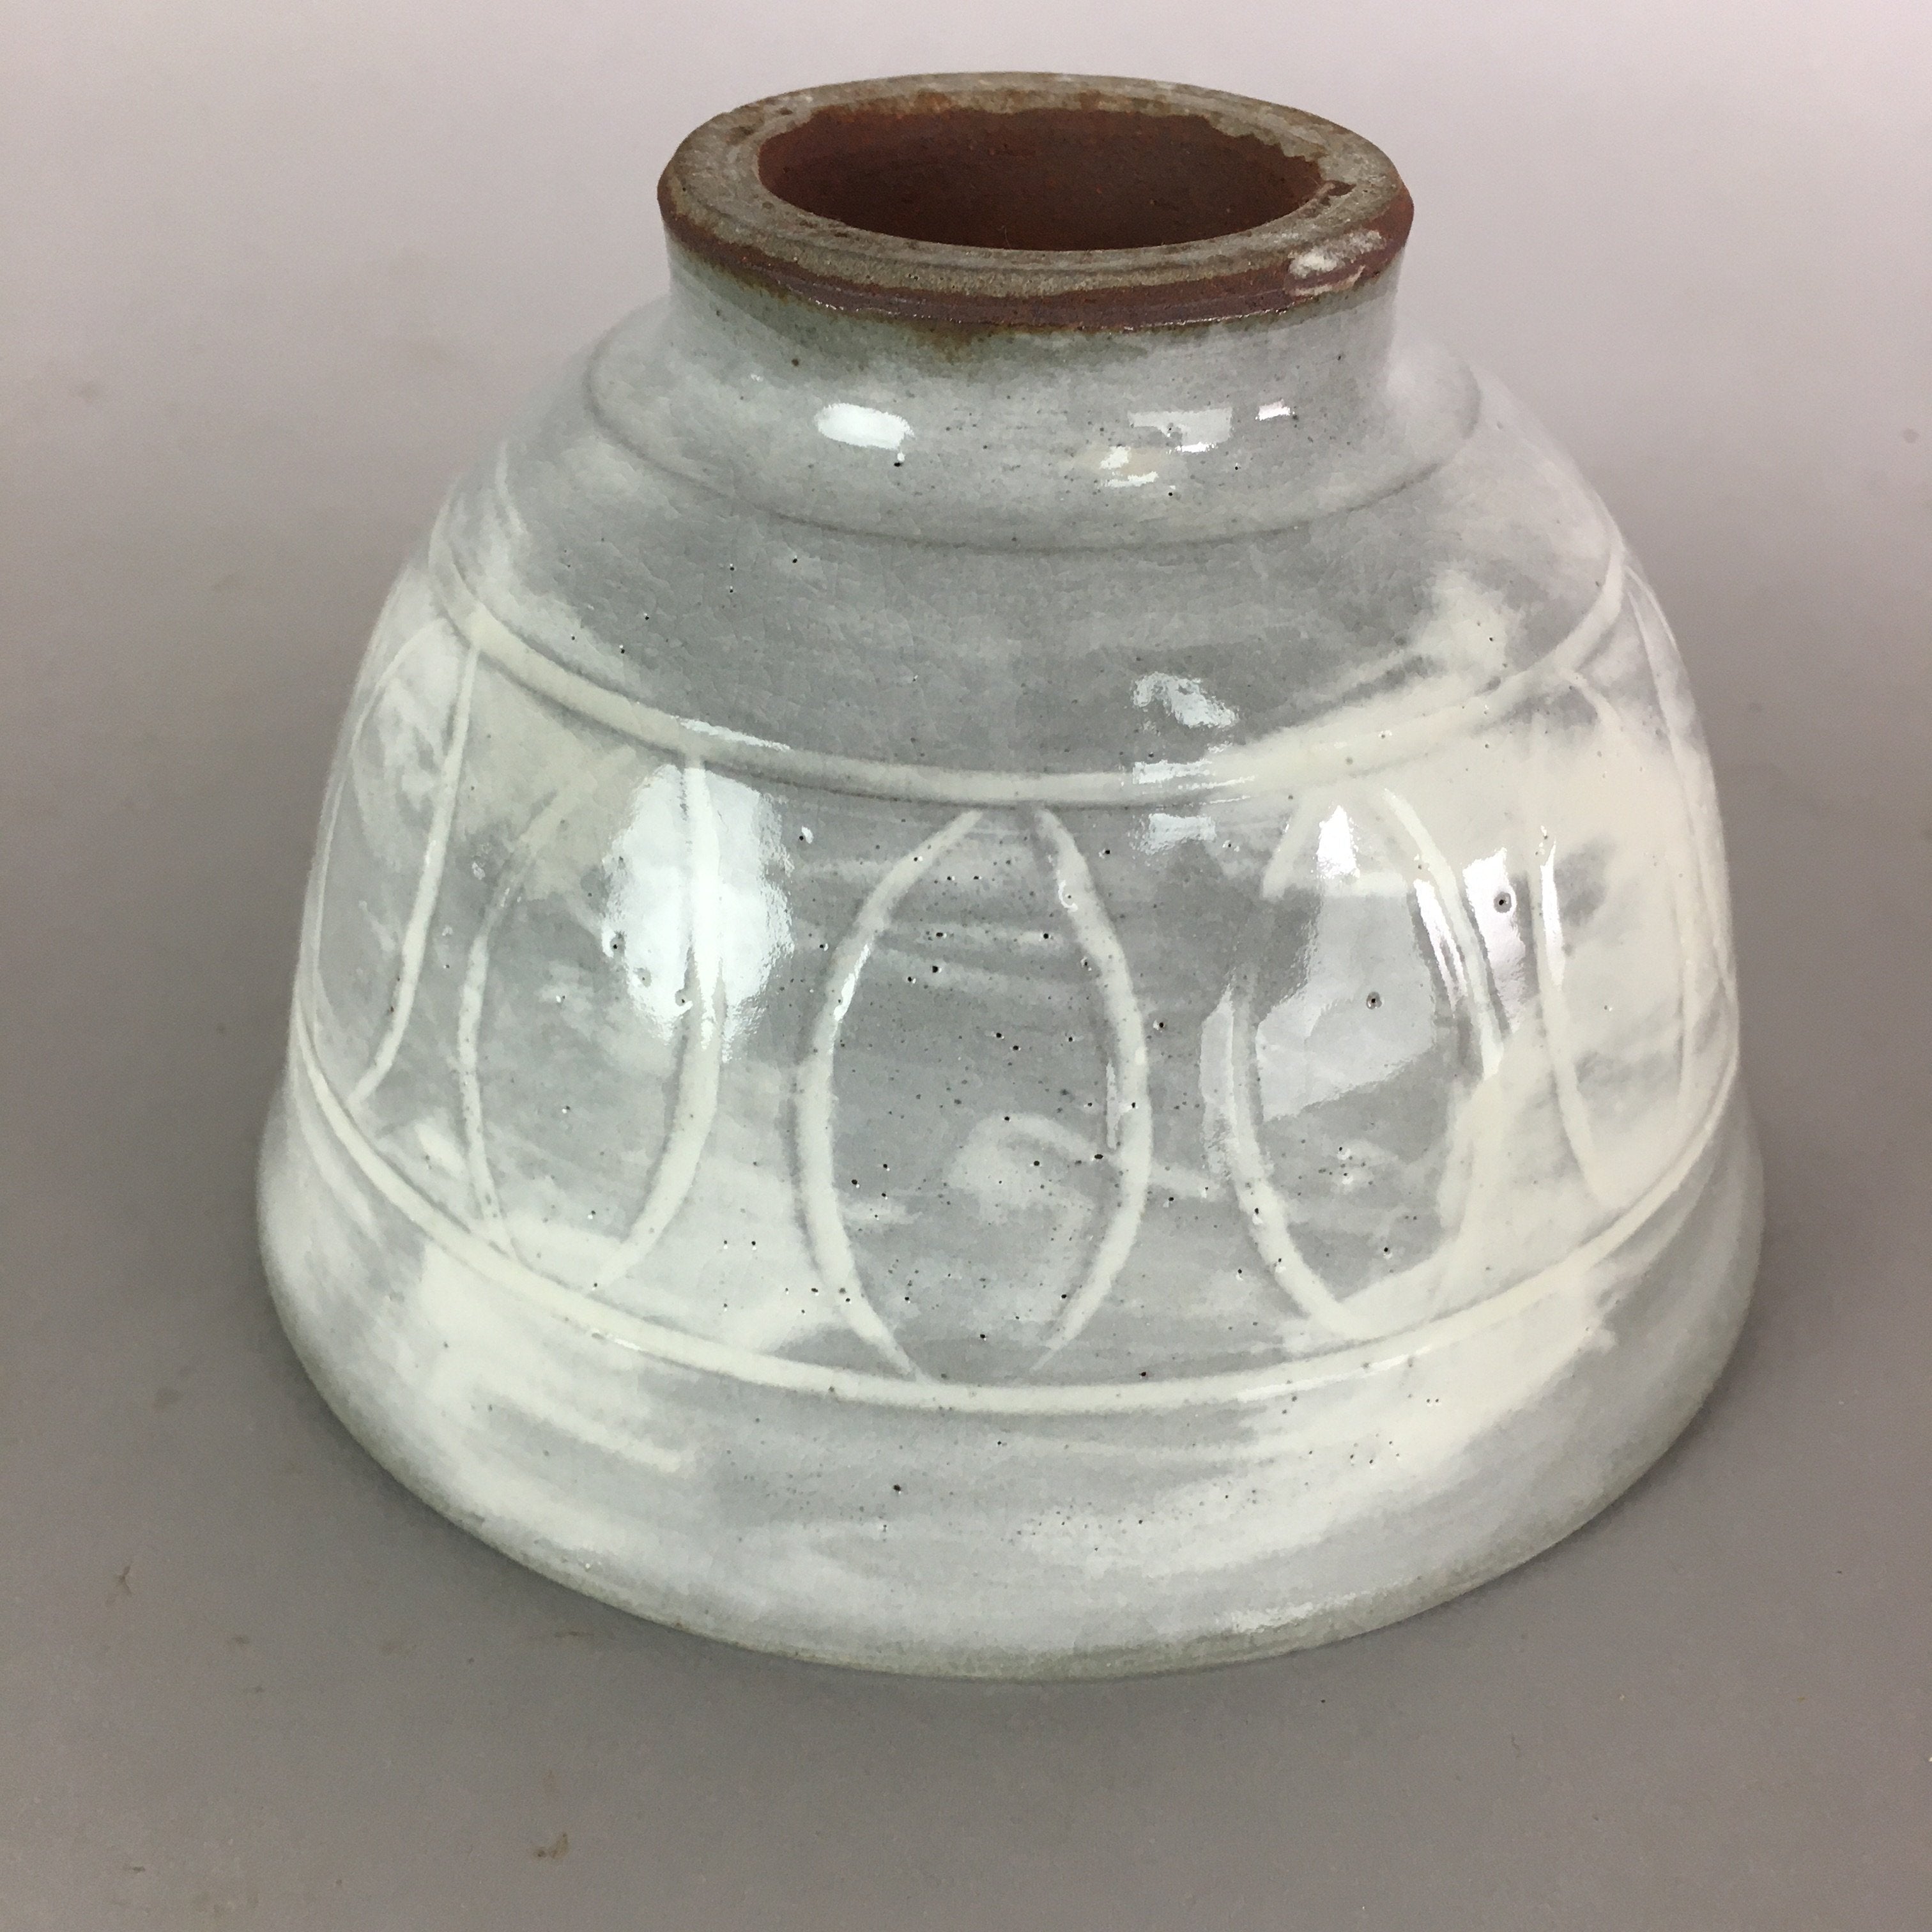 Japanese Ceramic Rice Bowl Vtg Chawan Pottery Gray White Yakimono Donburi PP491